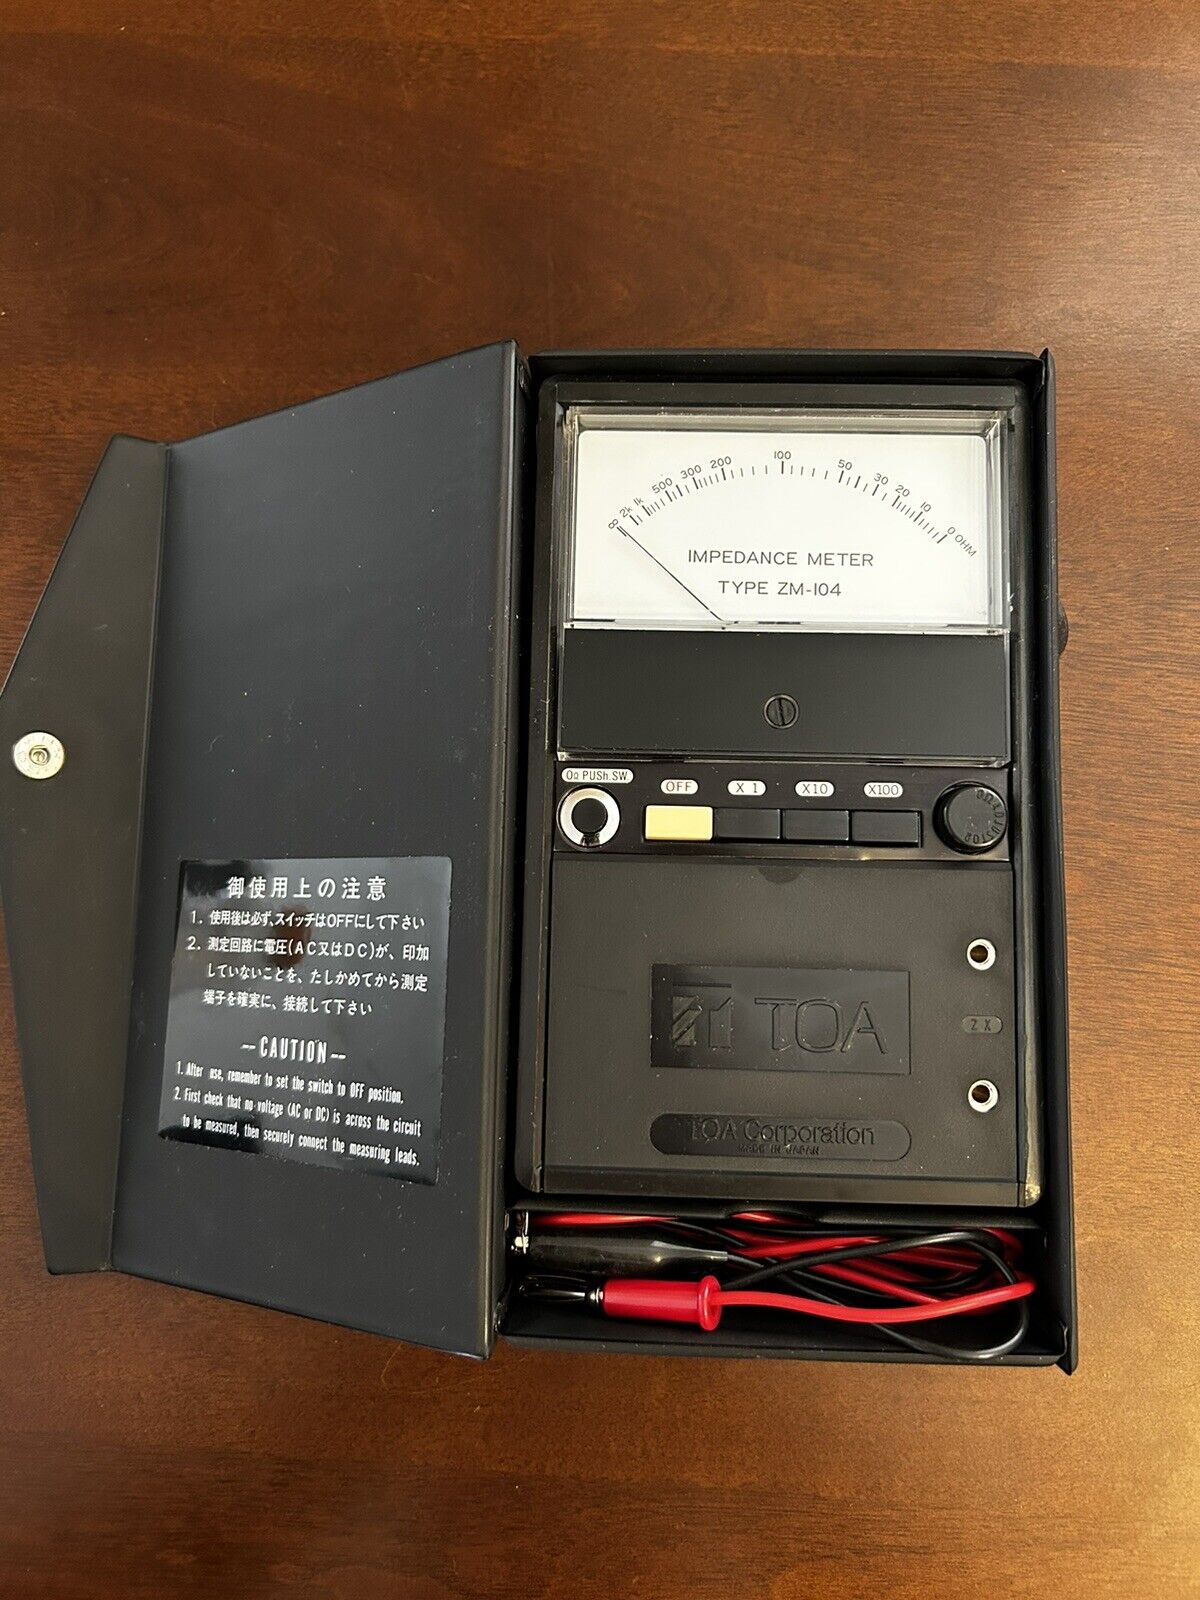 TOA Speaker Impedance Meter